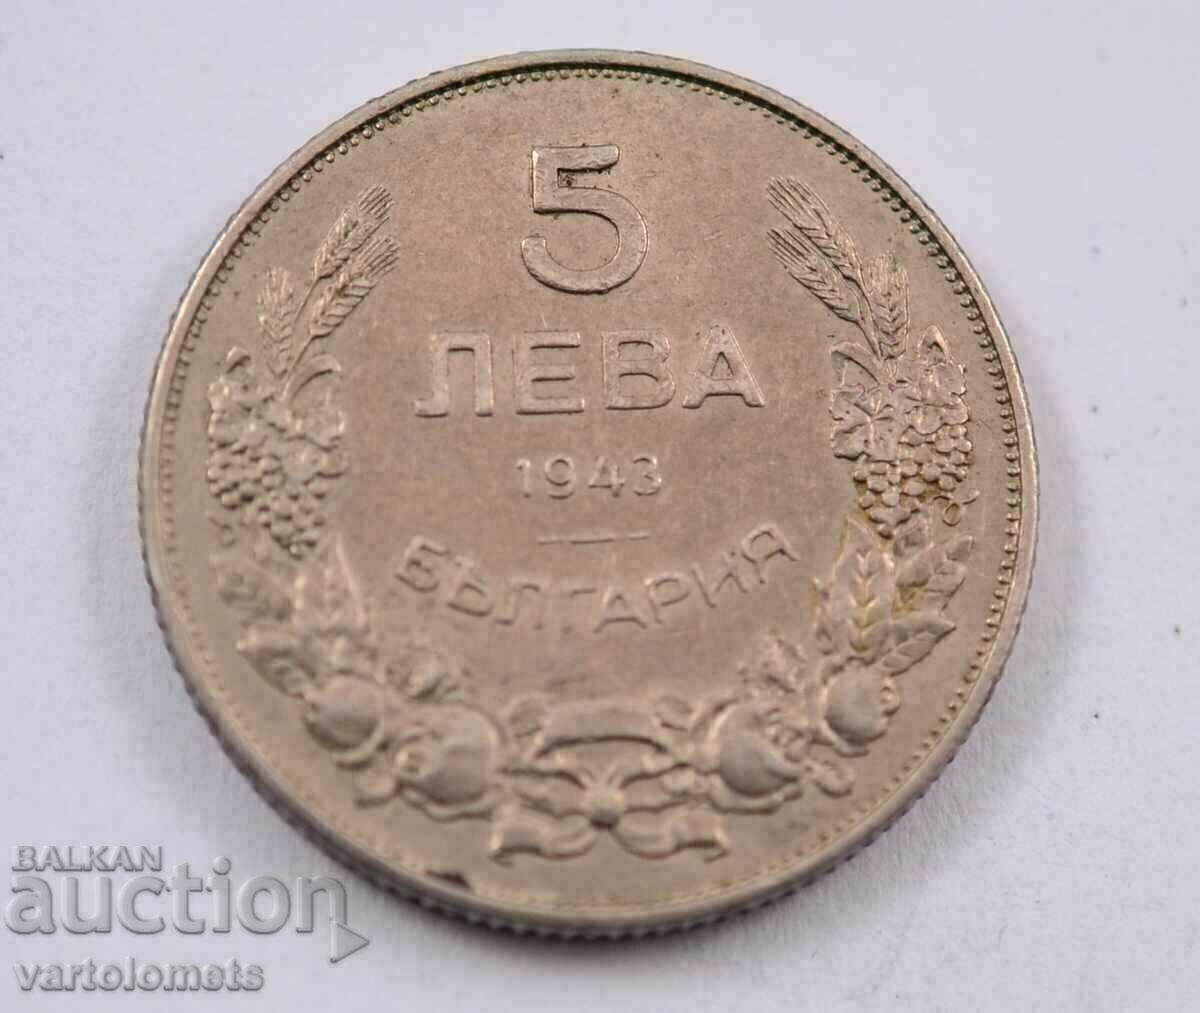 5 BGN 1943 - Bulgaria glossy